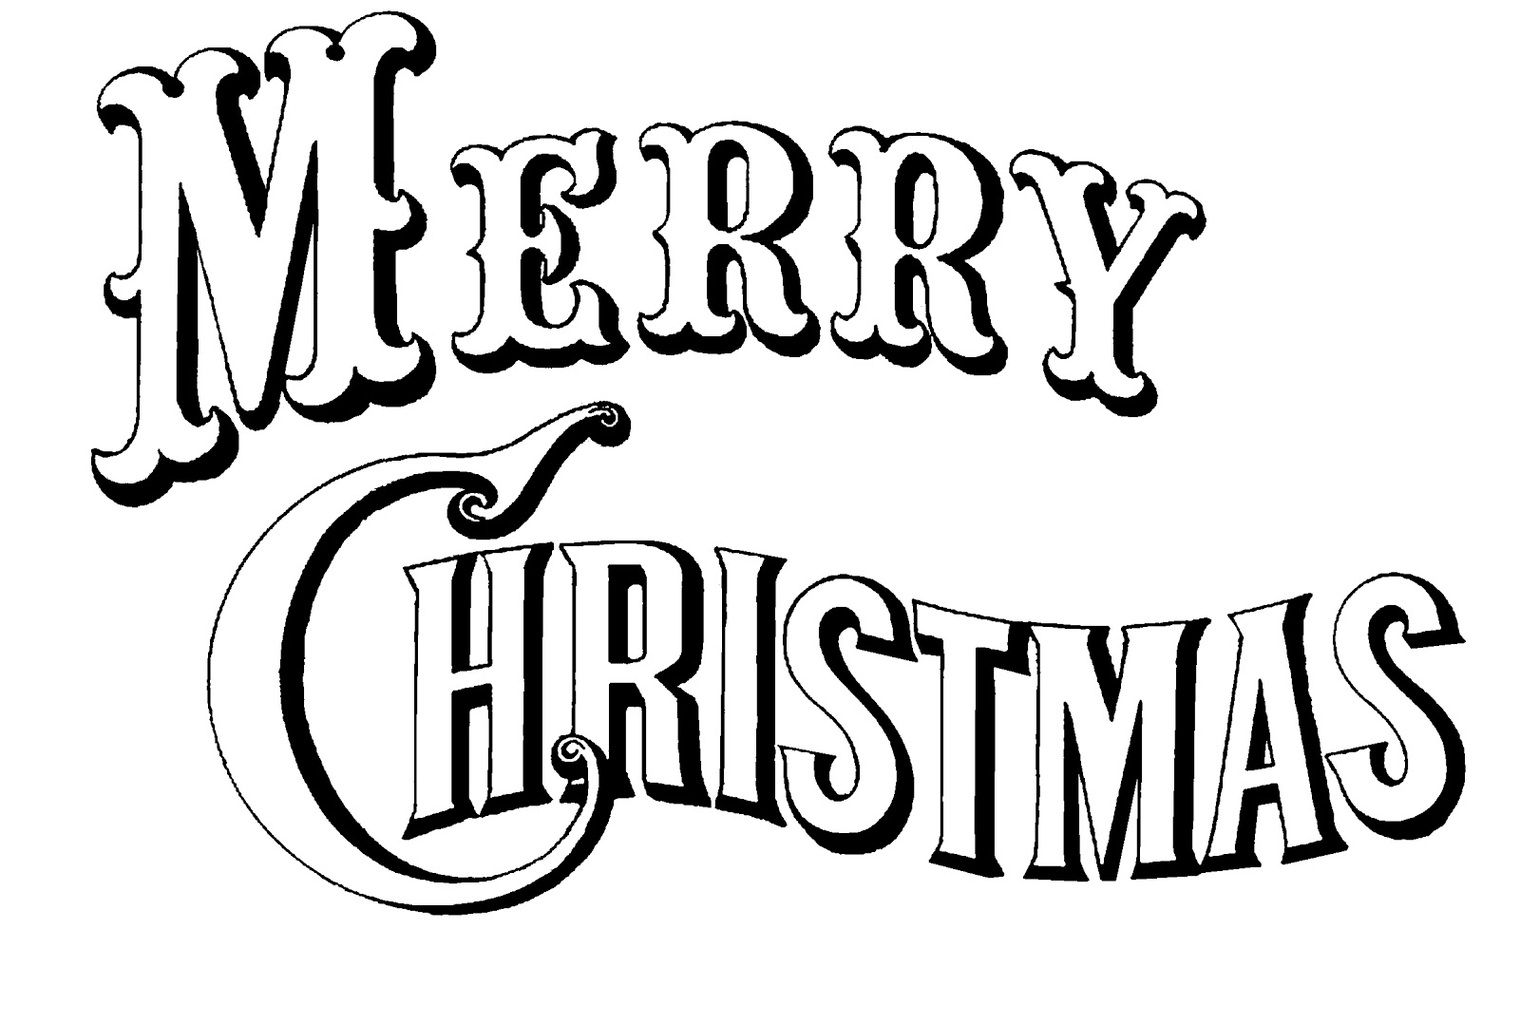 Christmas clipart black and white christmas eve - ClipartFox